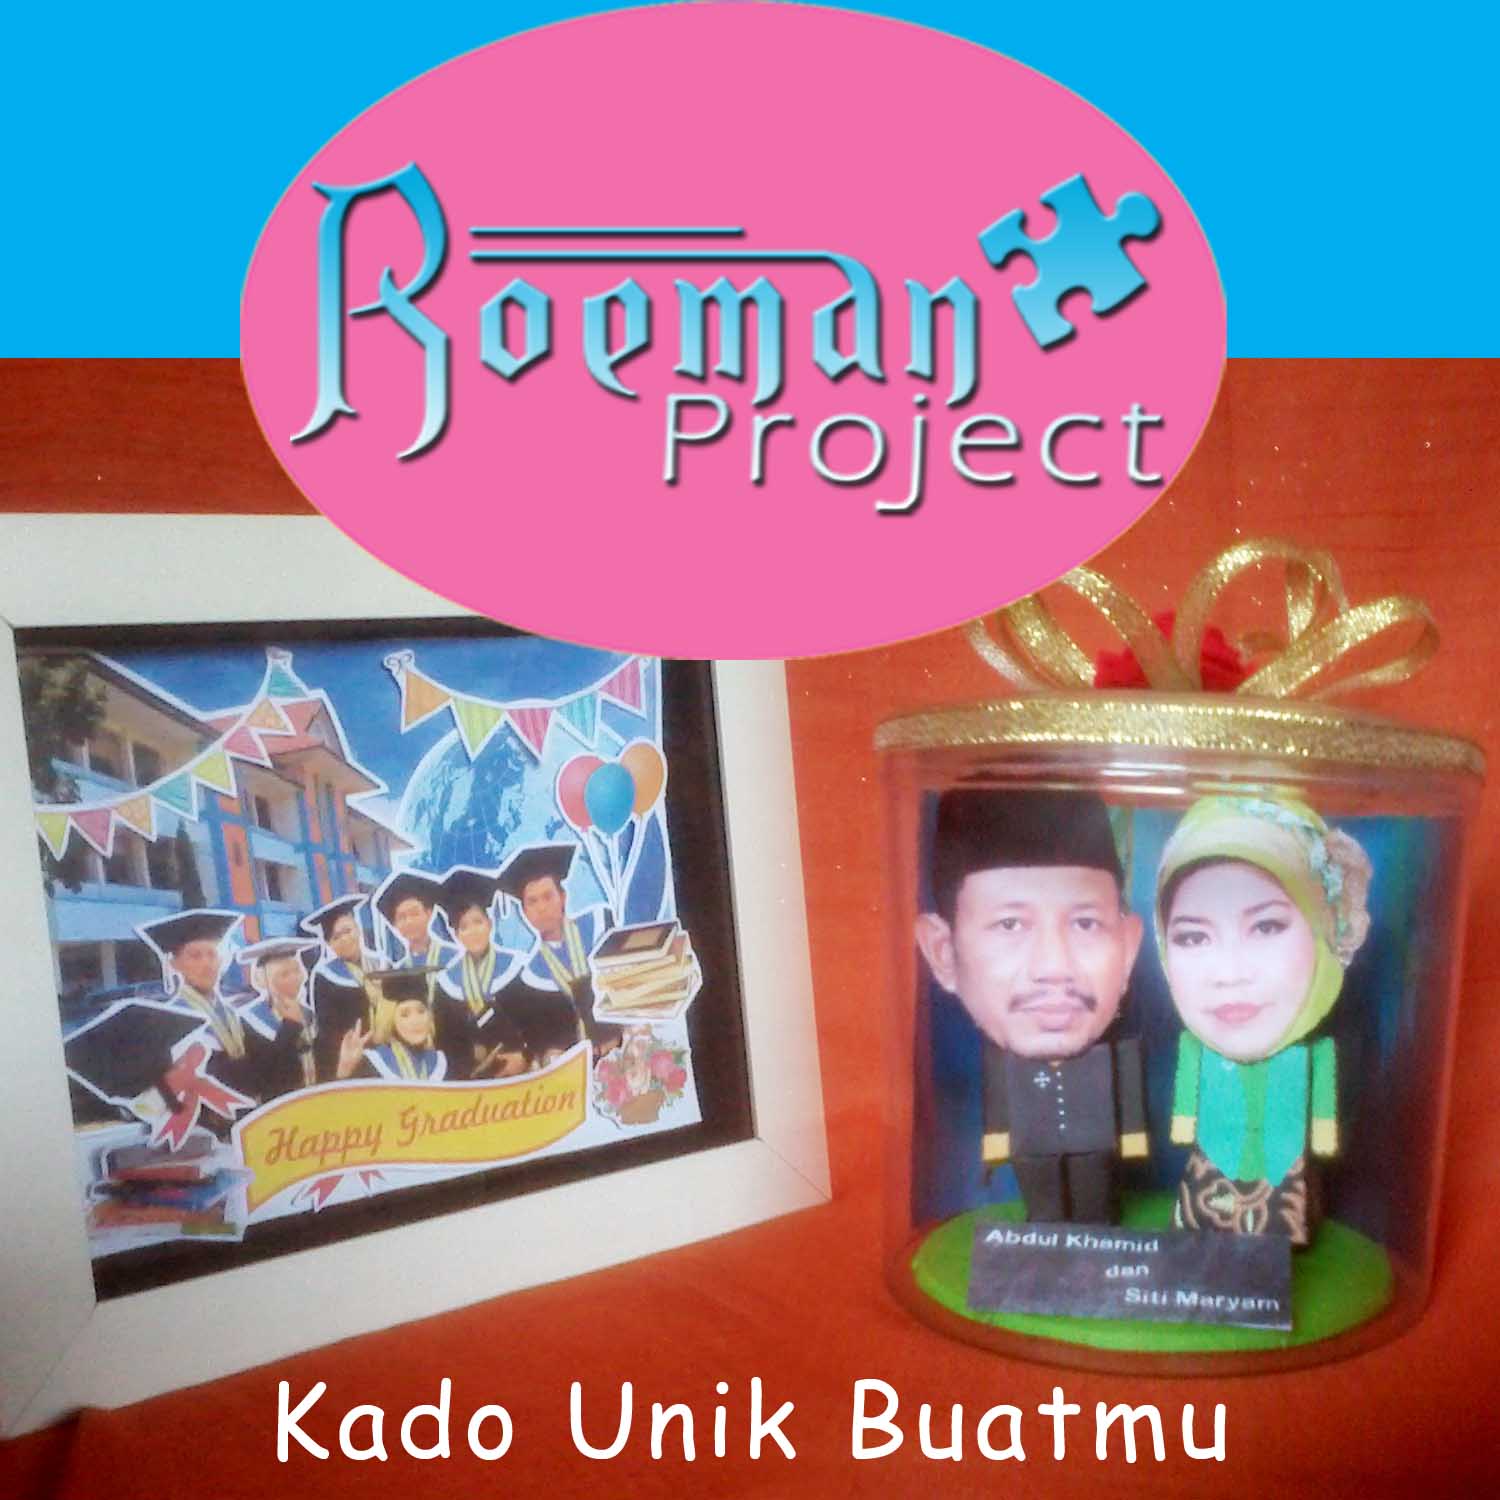 Roeman Project